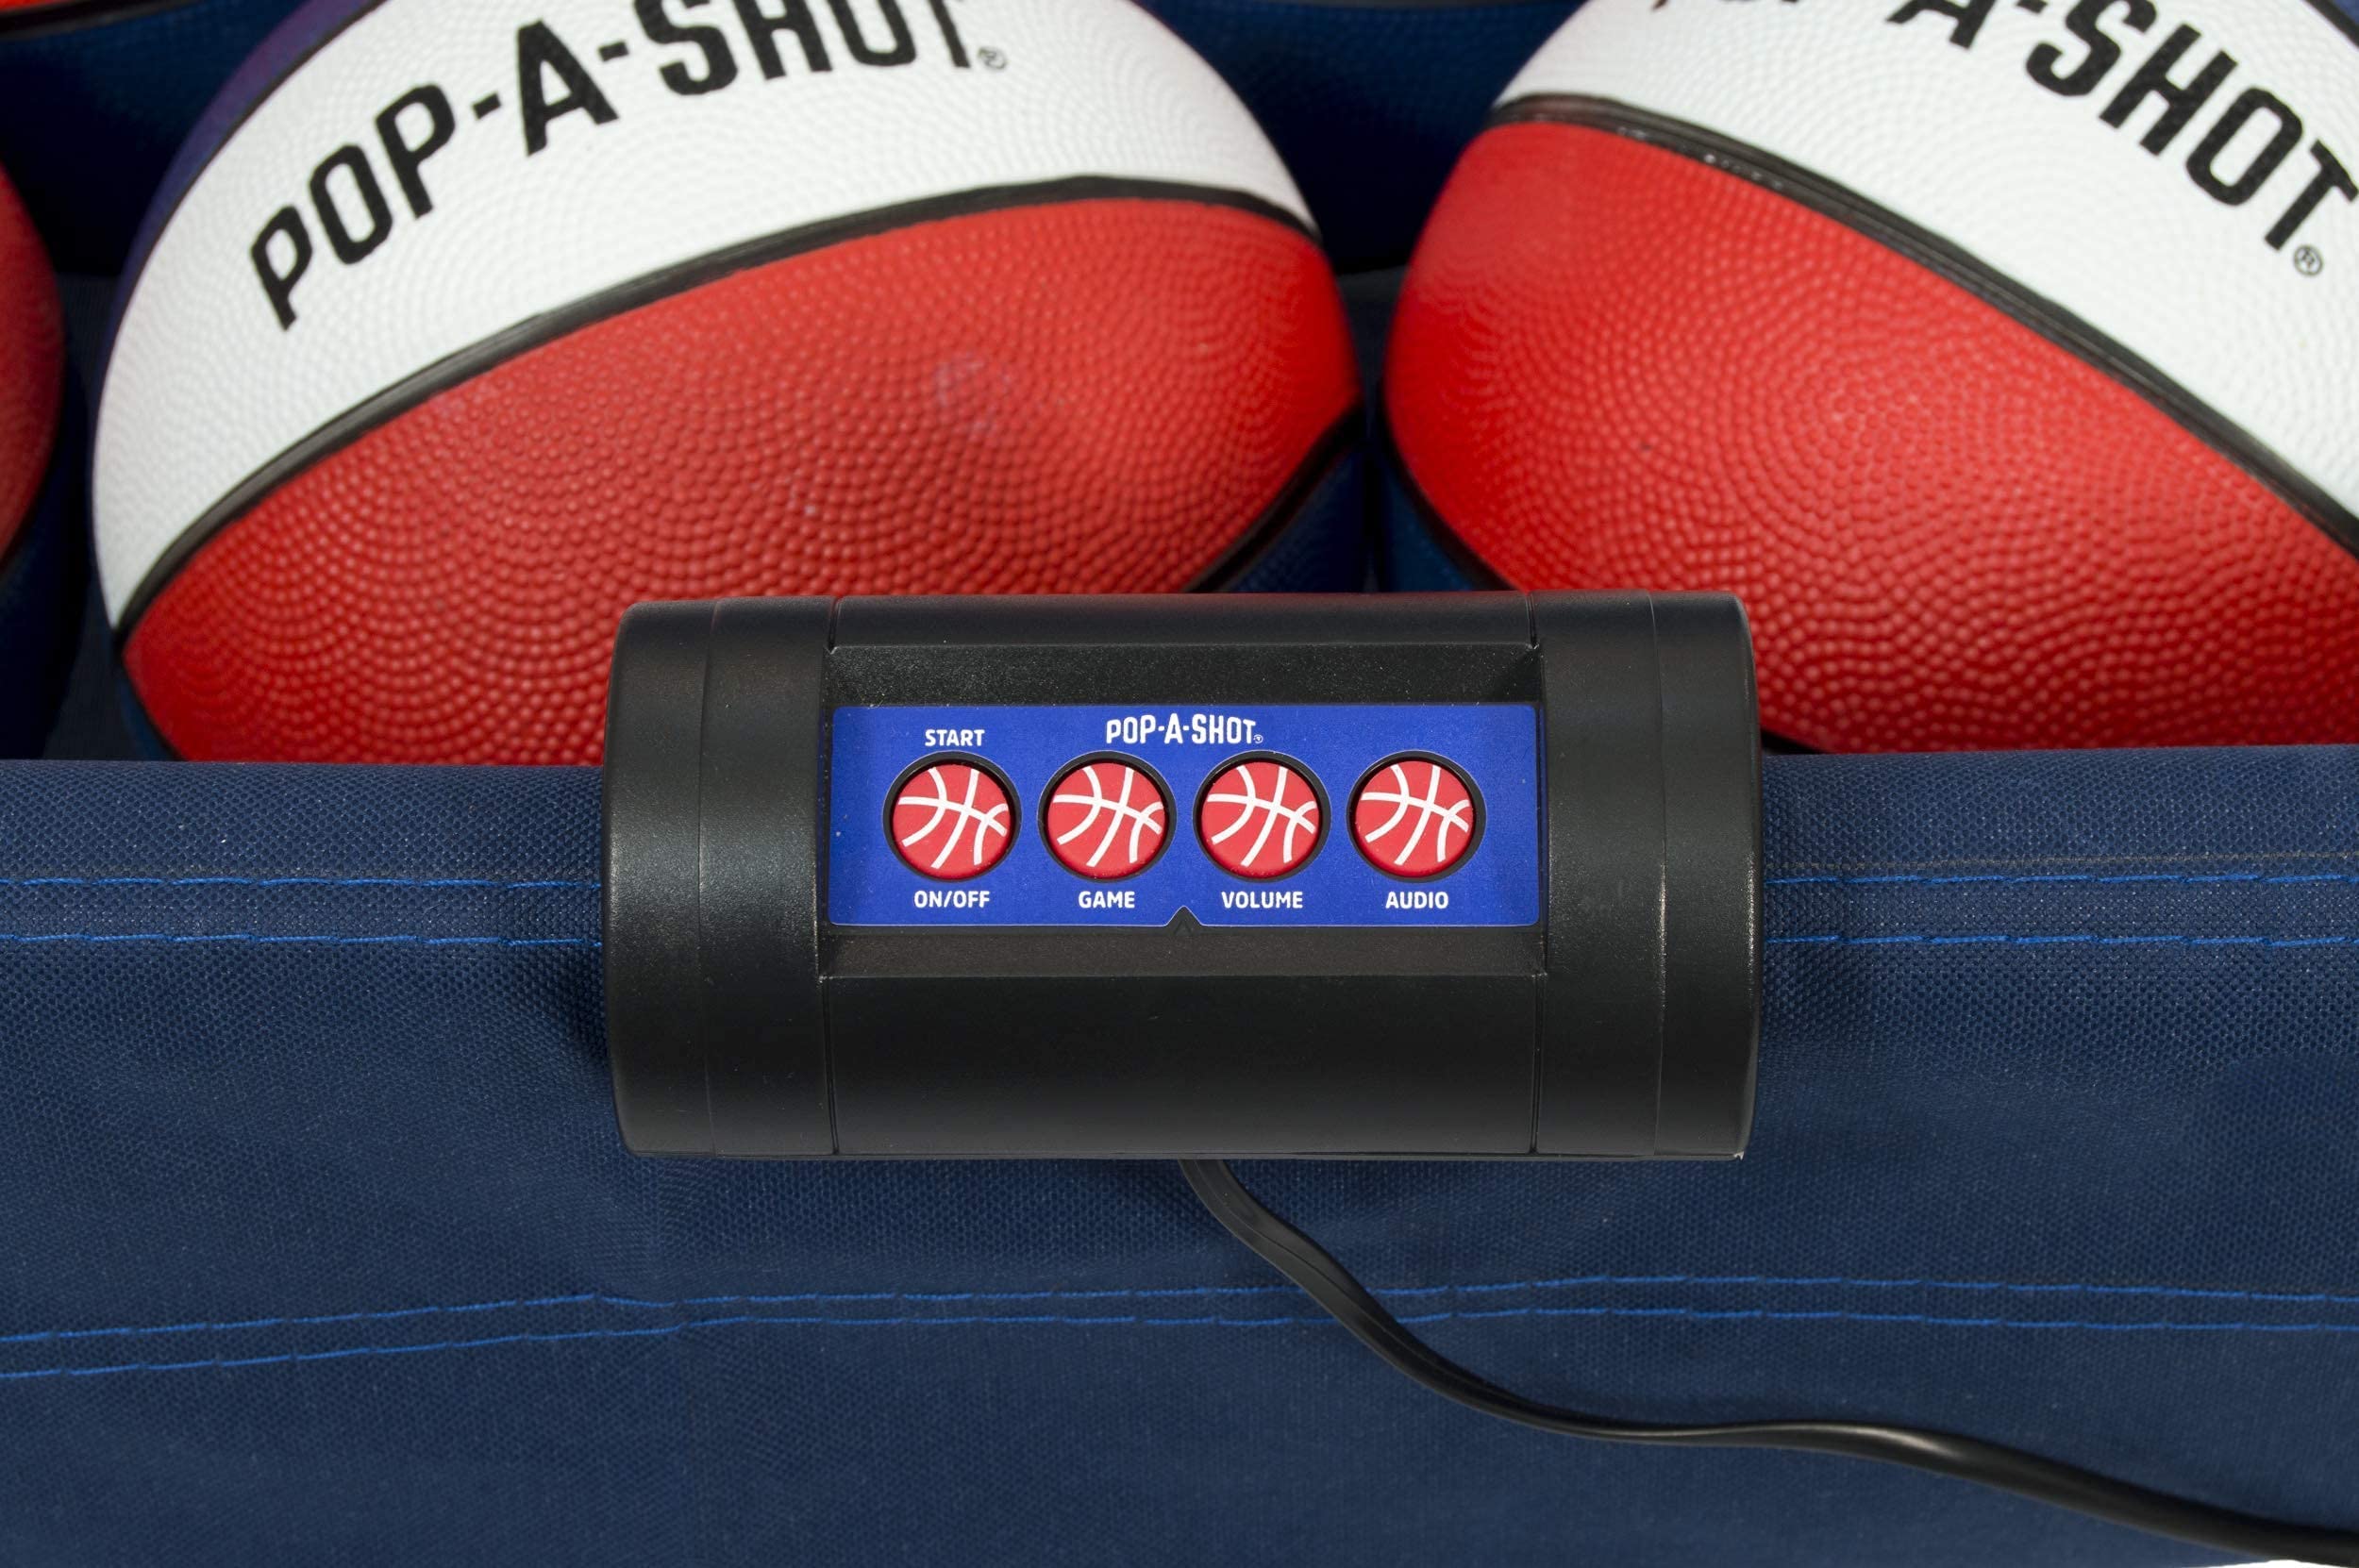 Pop-A-Shot - Home Single Shot | Arcade Basketball Fun at Home | Infrared Sensor Scoring | 6 Game Modes | 4 Balls | Foldable Storage | for Kids Ages 6-106